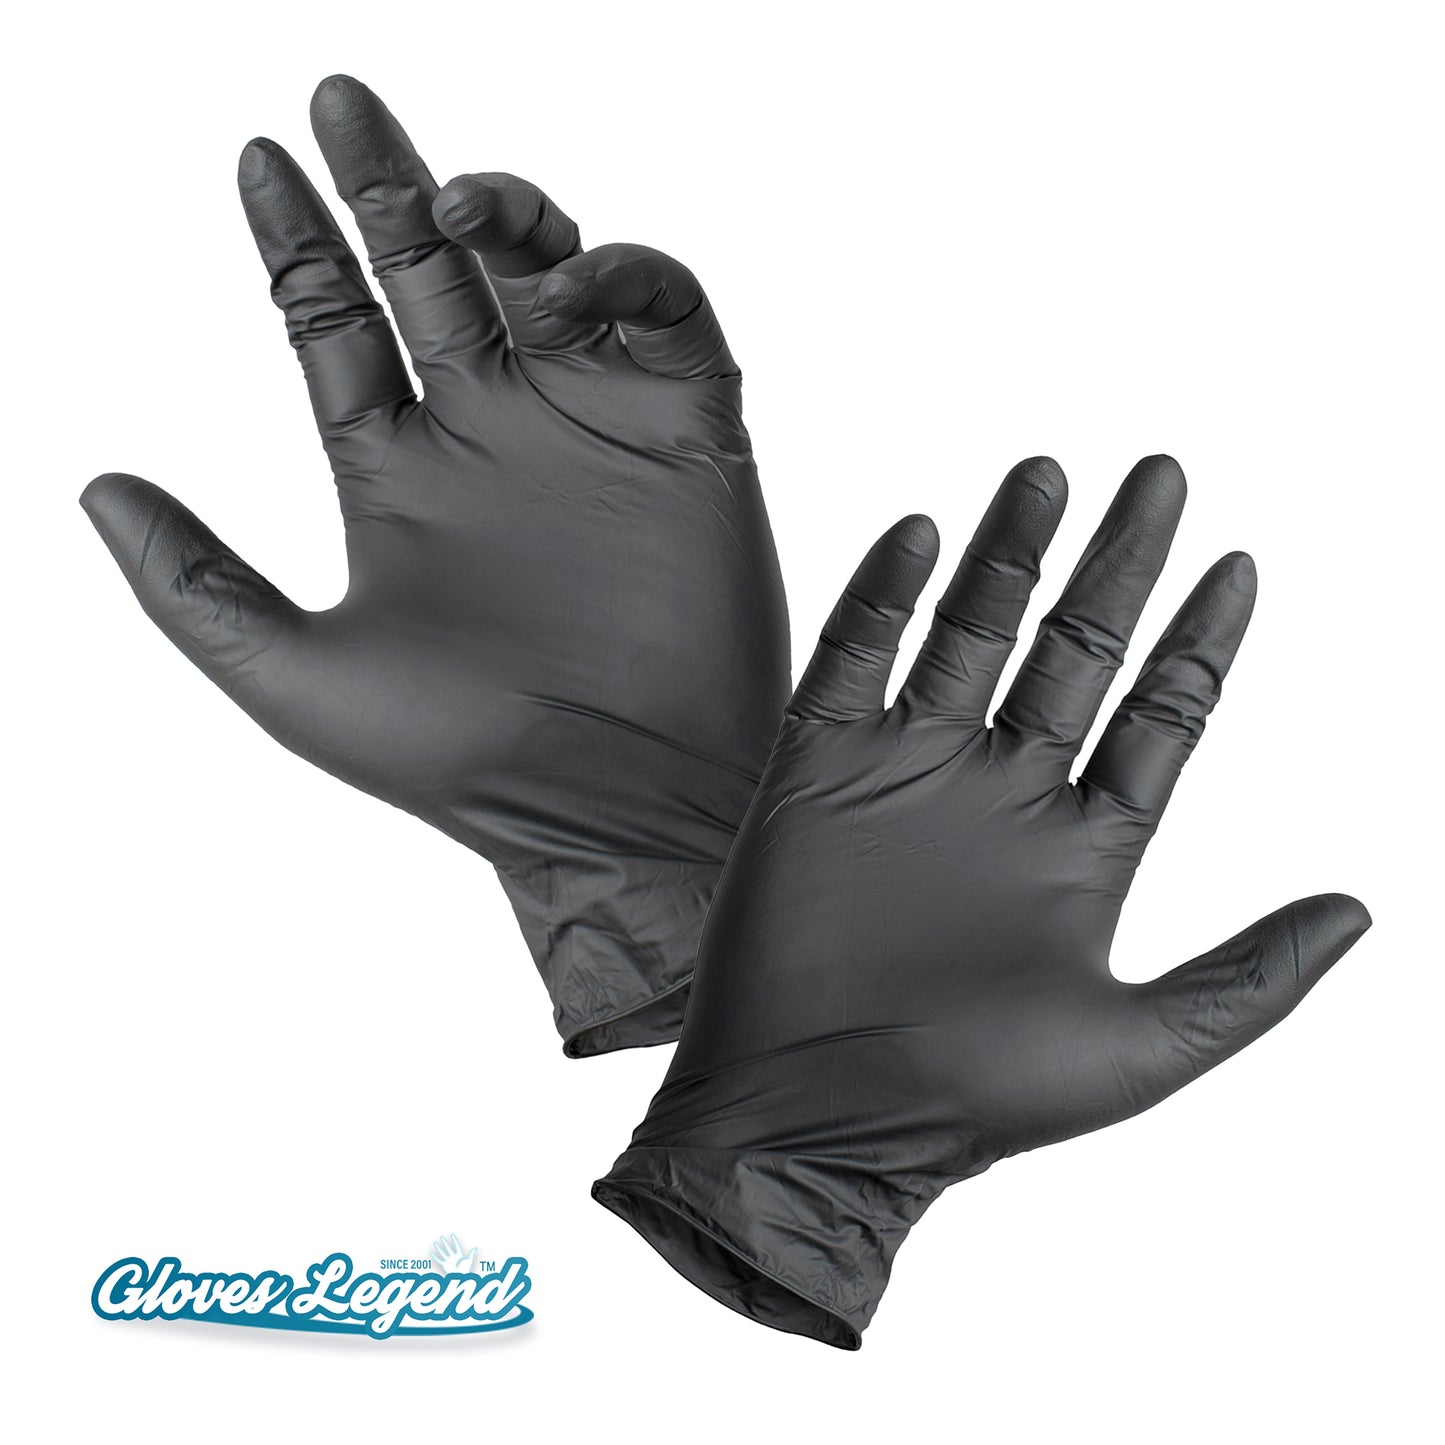 10 Boxes (100 Gloves) - Size Large - Black Latex Powder Free Medical Exam Tattoo Piercing Gloves